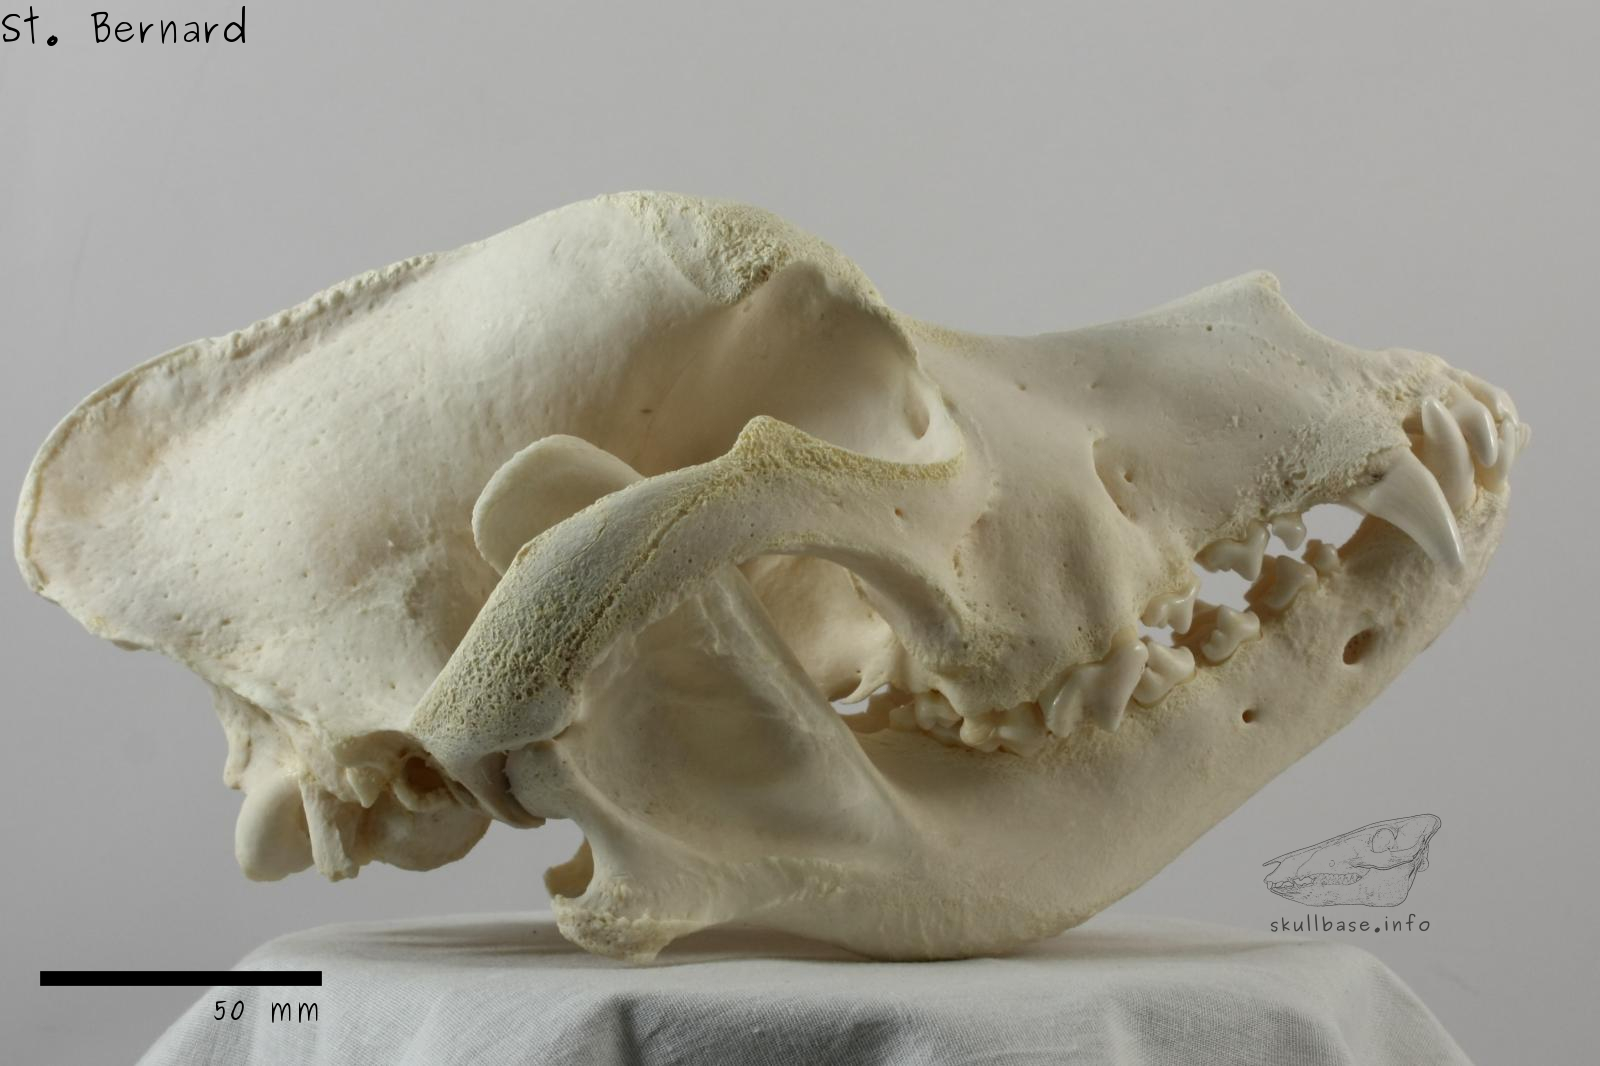 St. Bernard (Canis lupus familiaris) skull lateral view